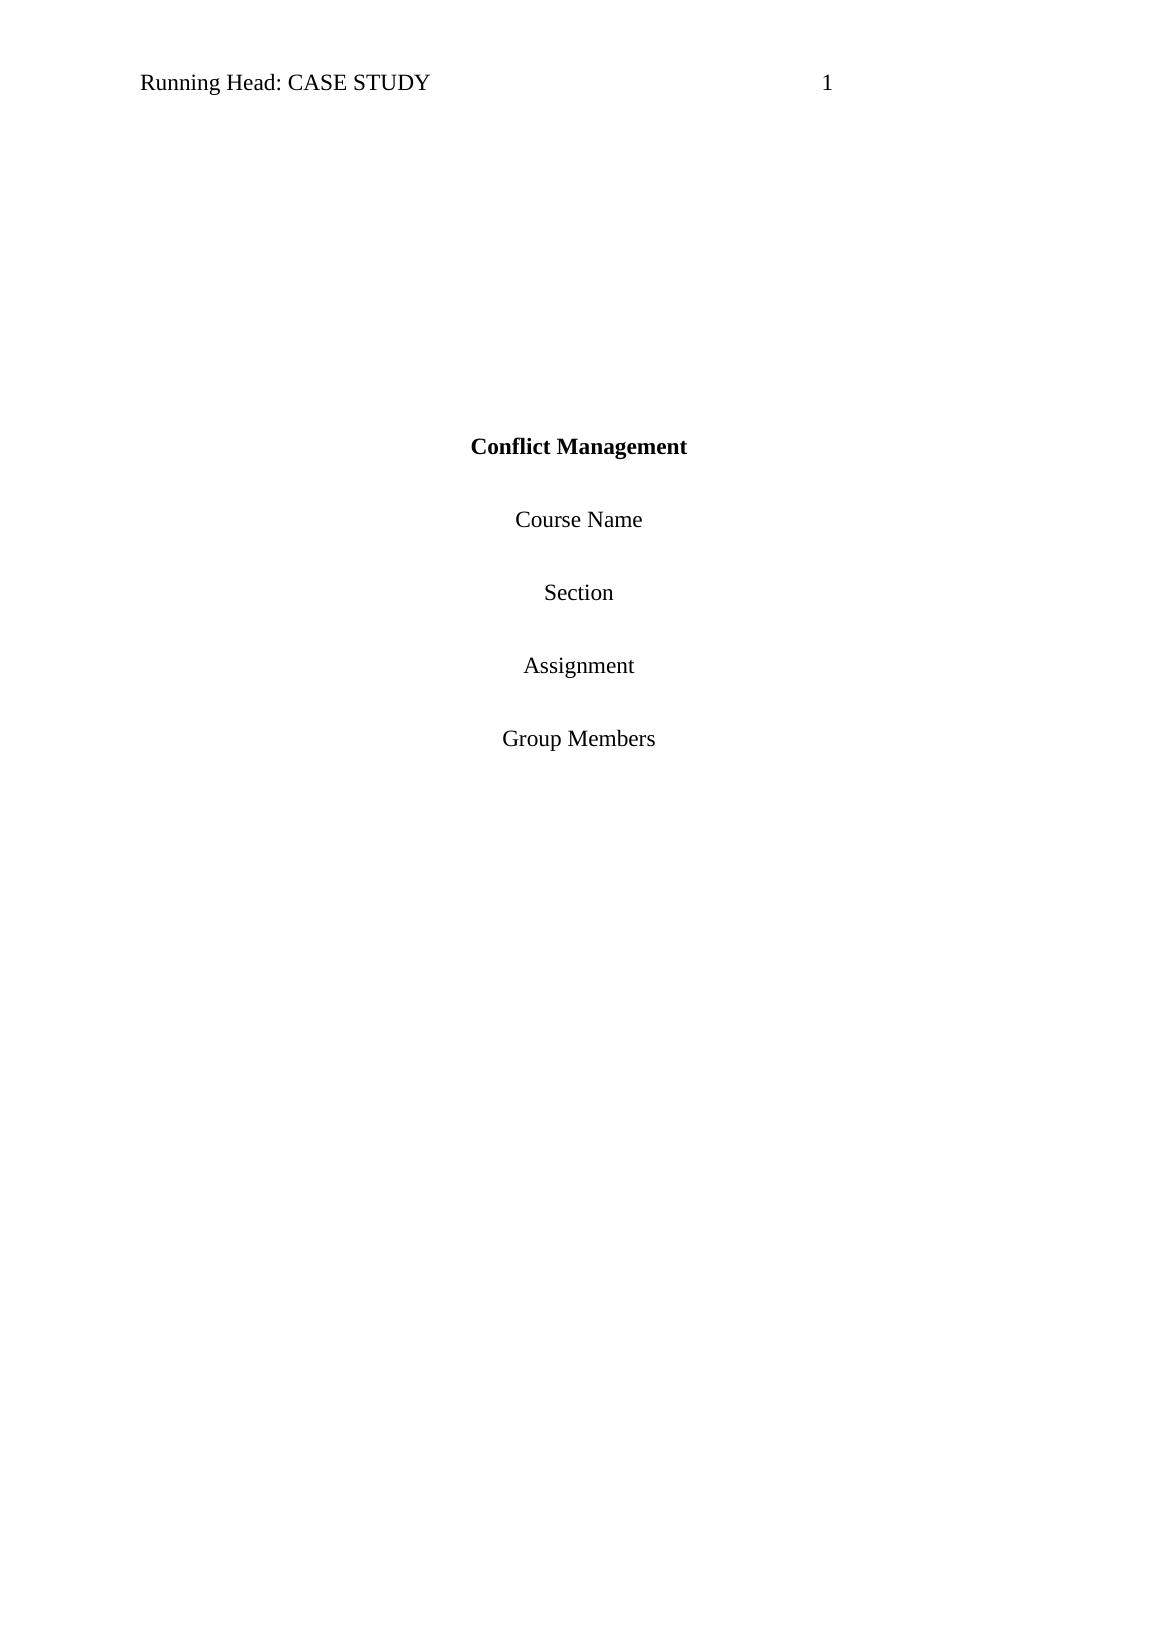 Conflict Management Case Study: Assignment_1